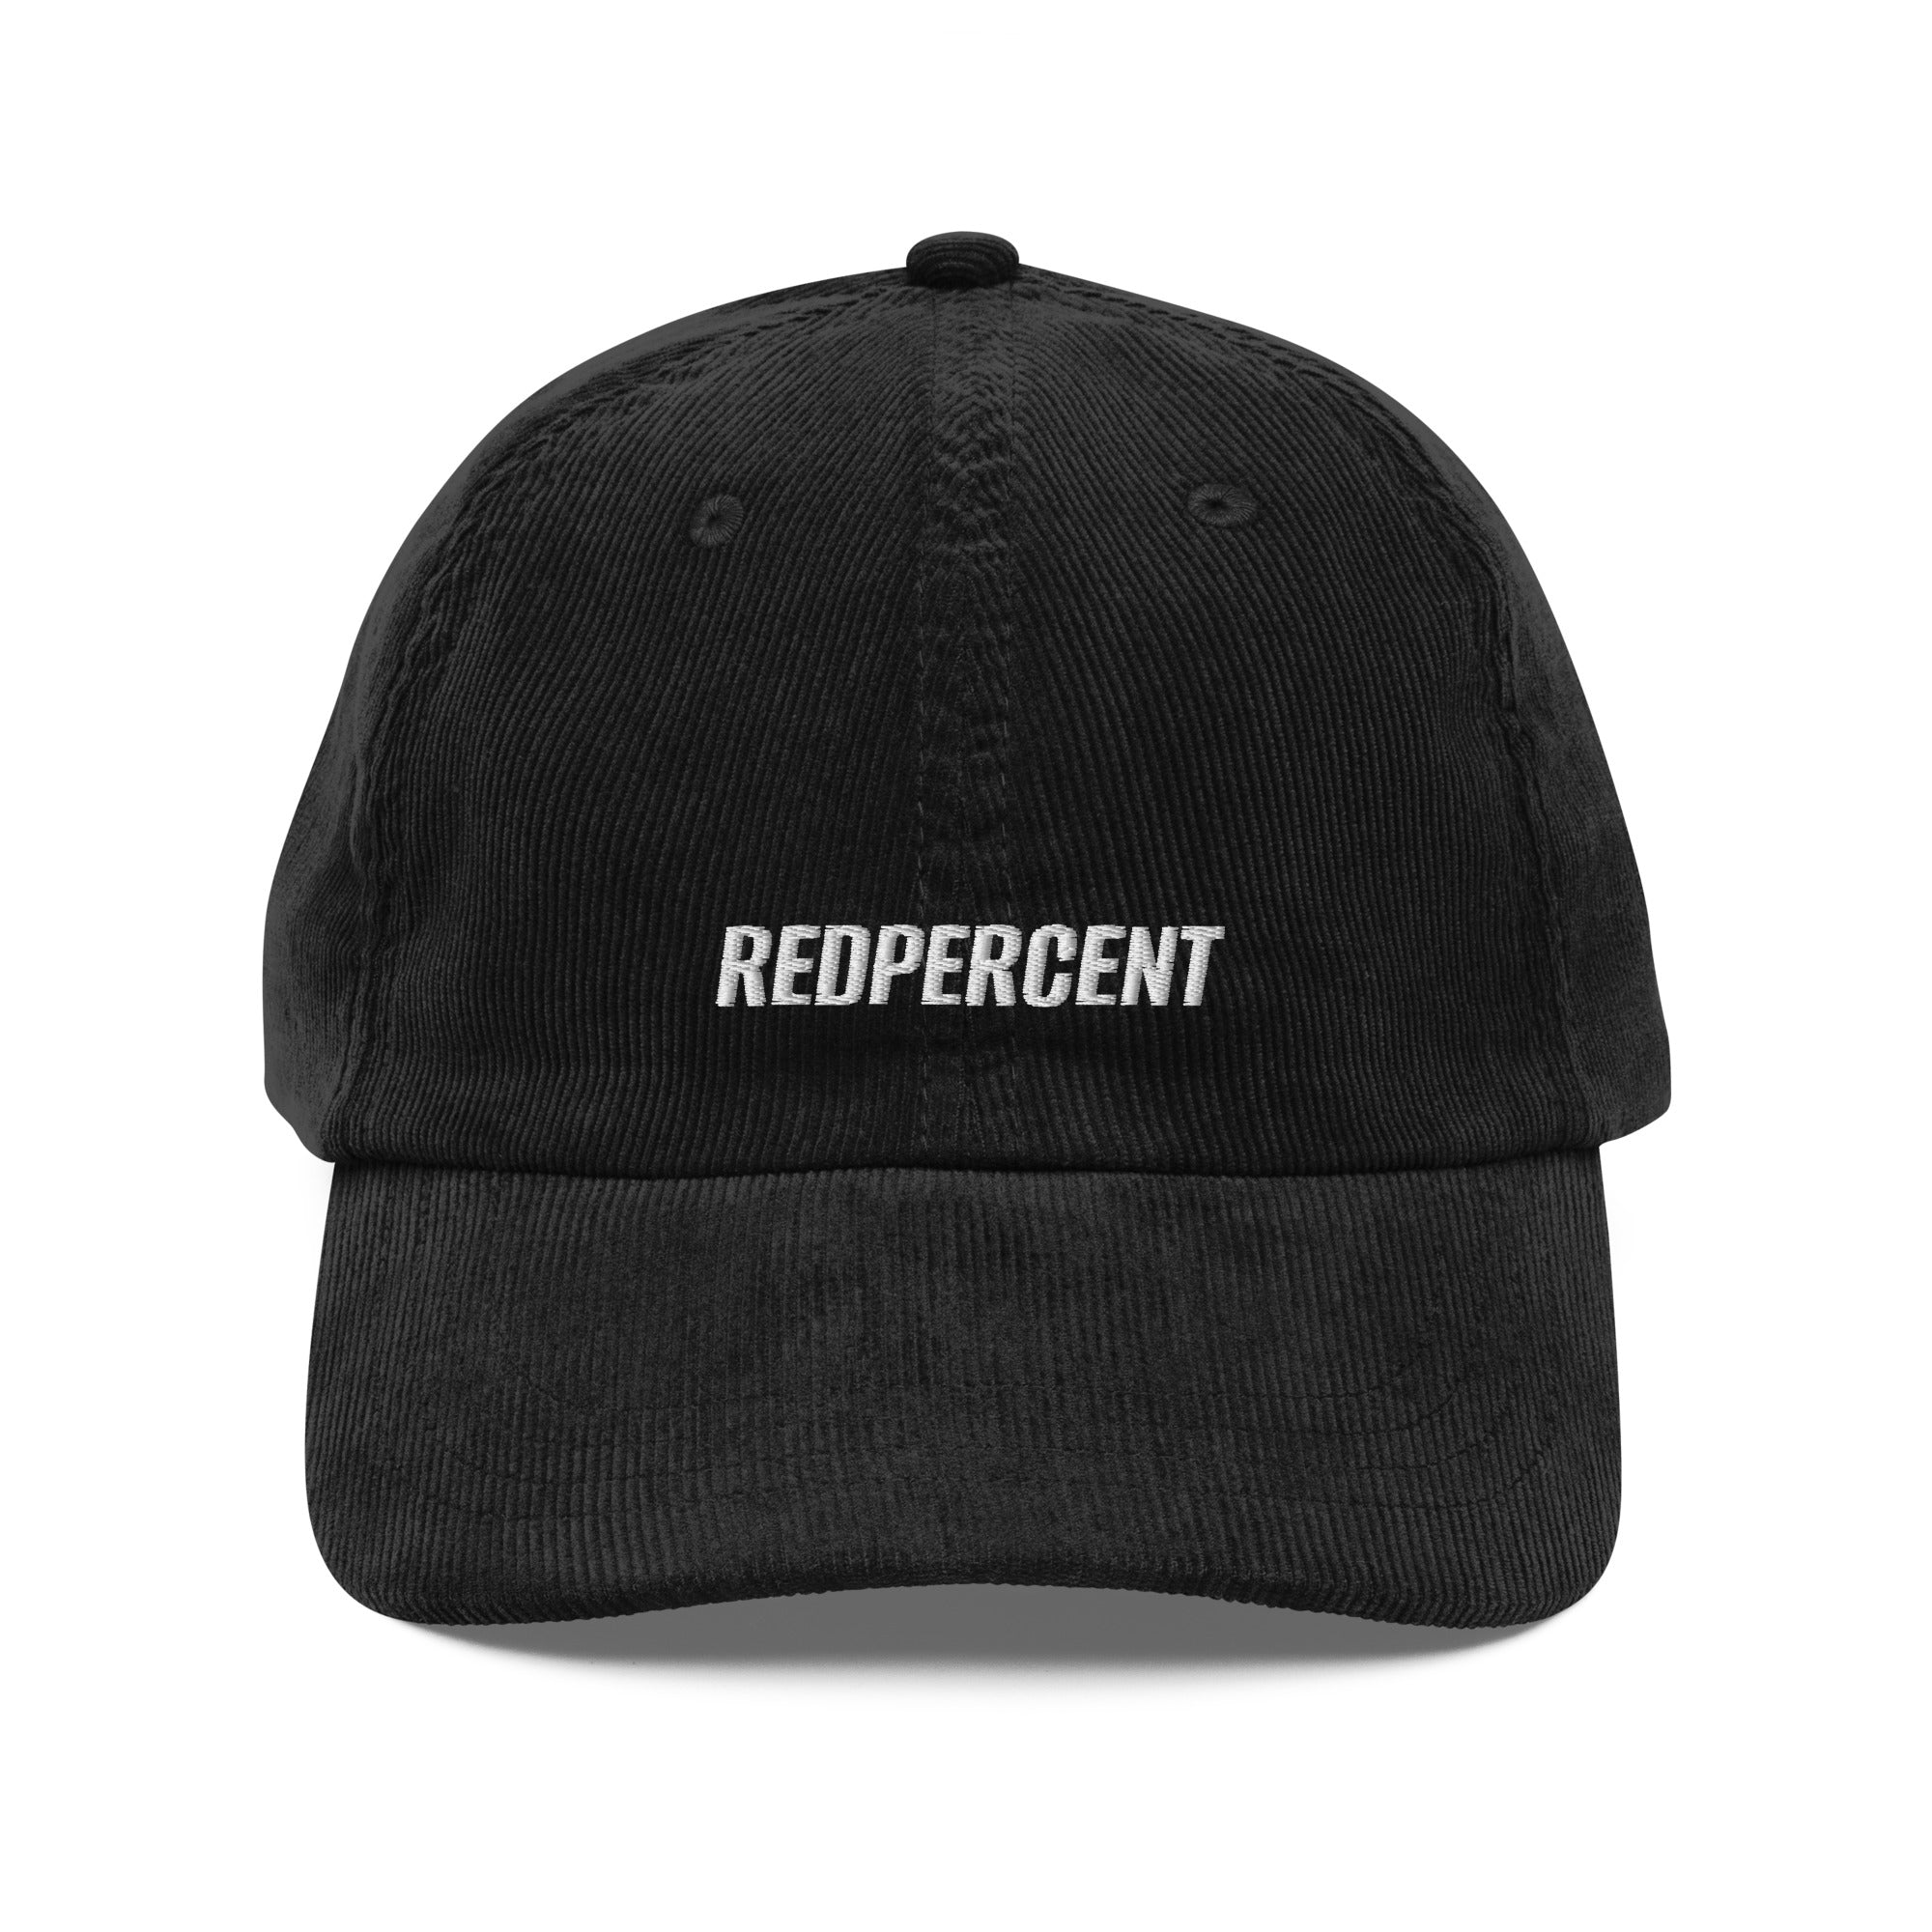 'REDPERCENT' CORDUROY CAP